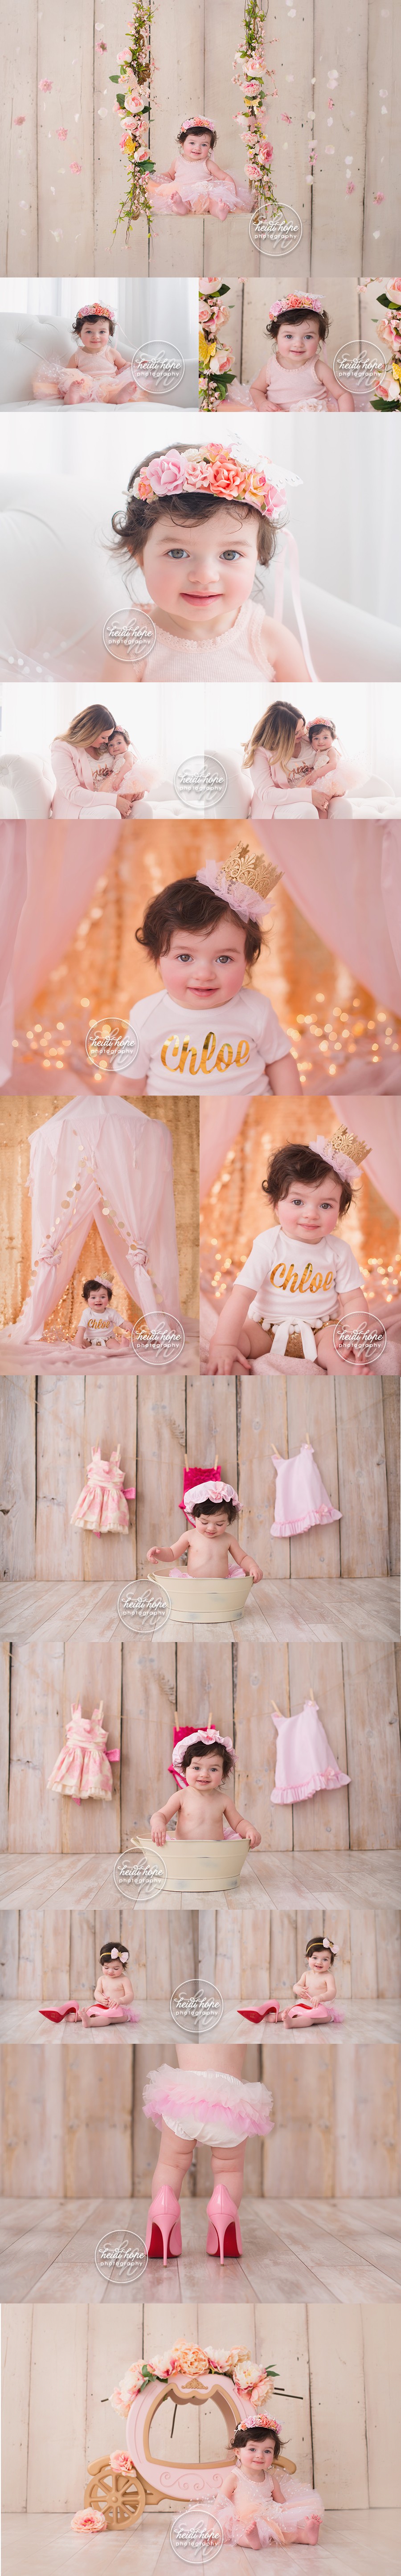 boston massachusetts baby portrait photographer girly baby photo ideas